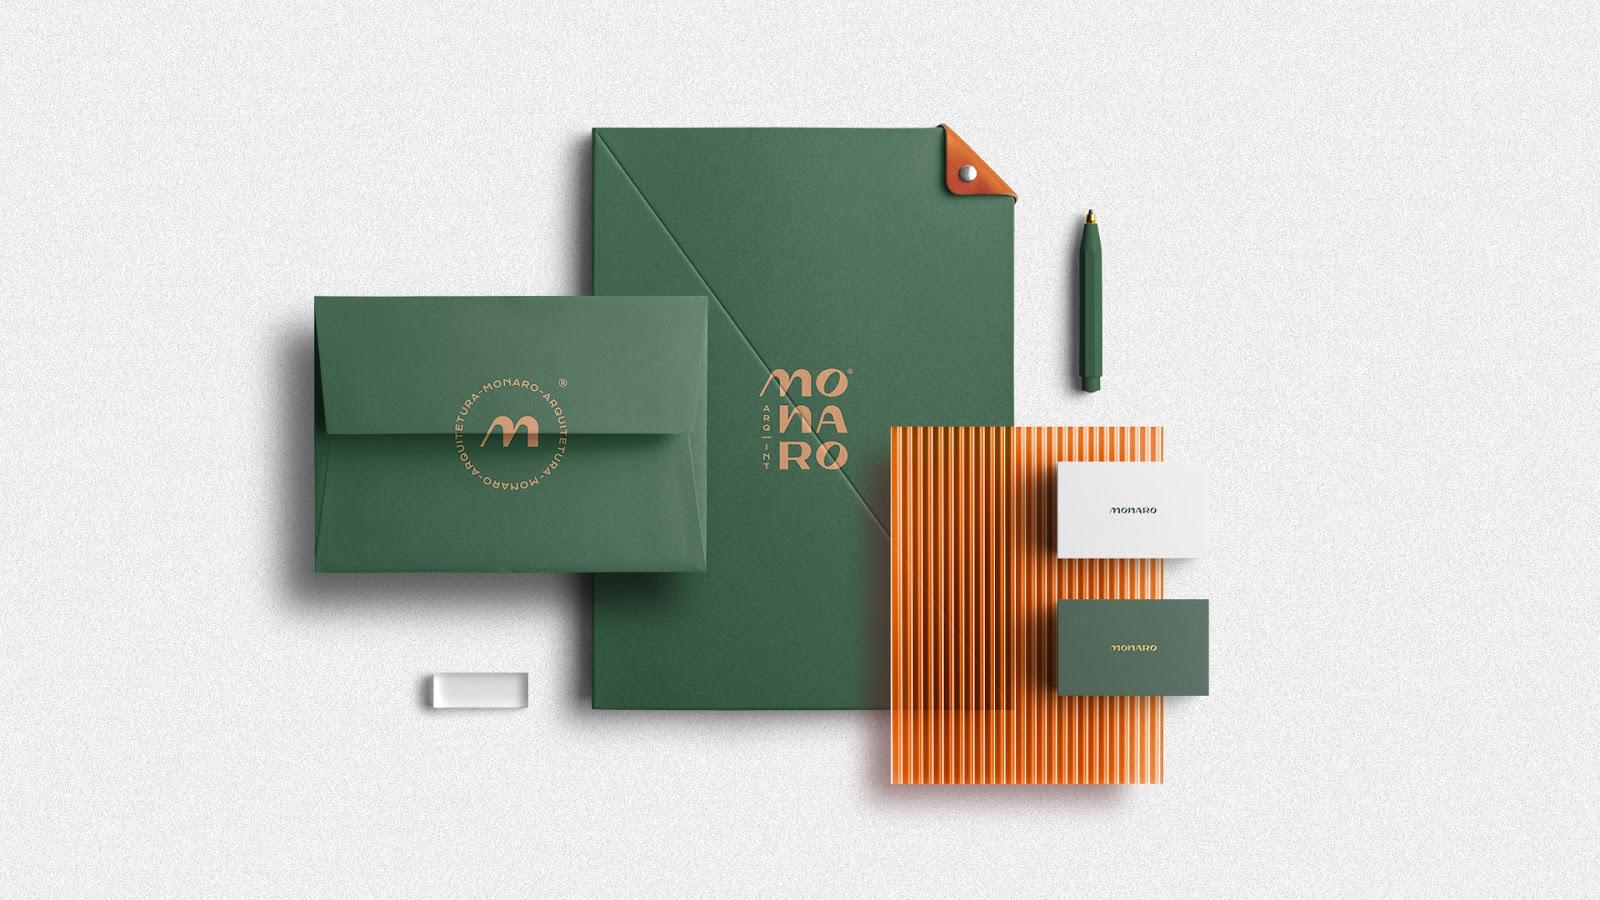 Monaro建筑公司视觉形象设计